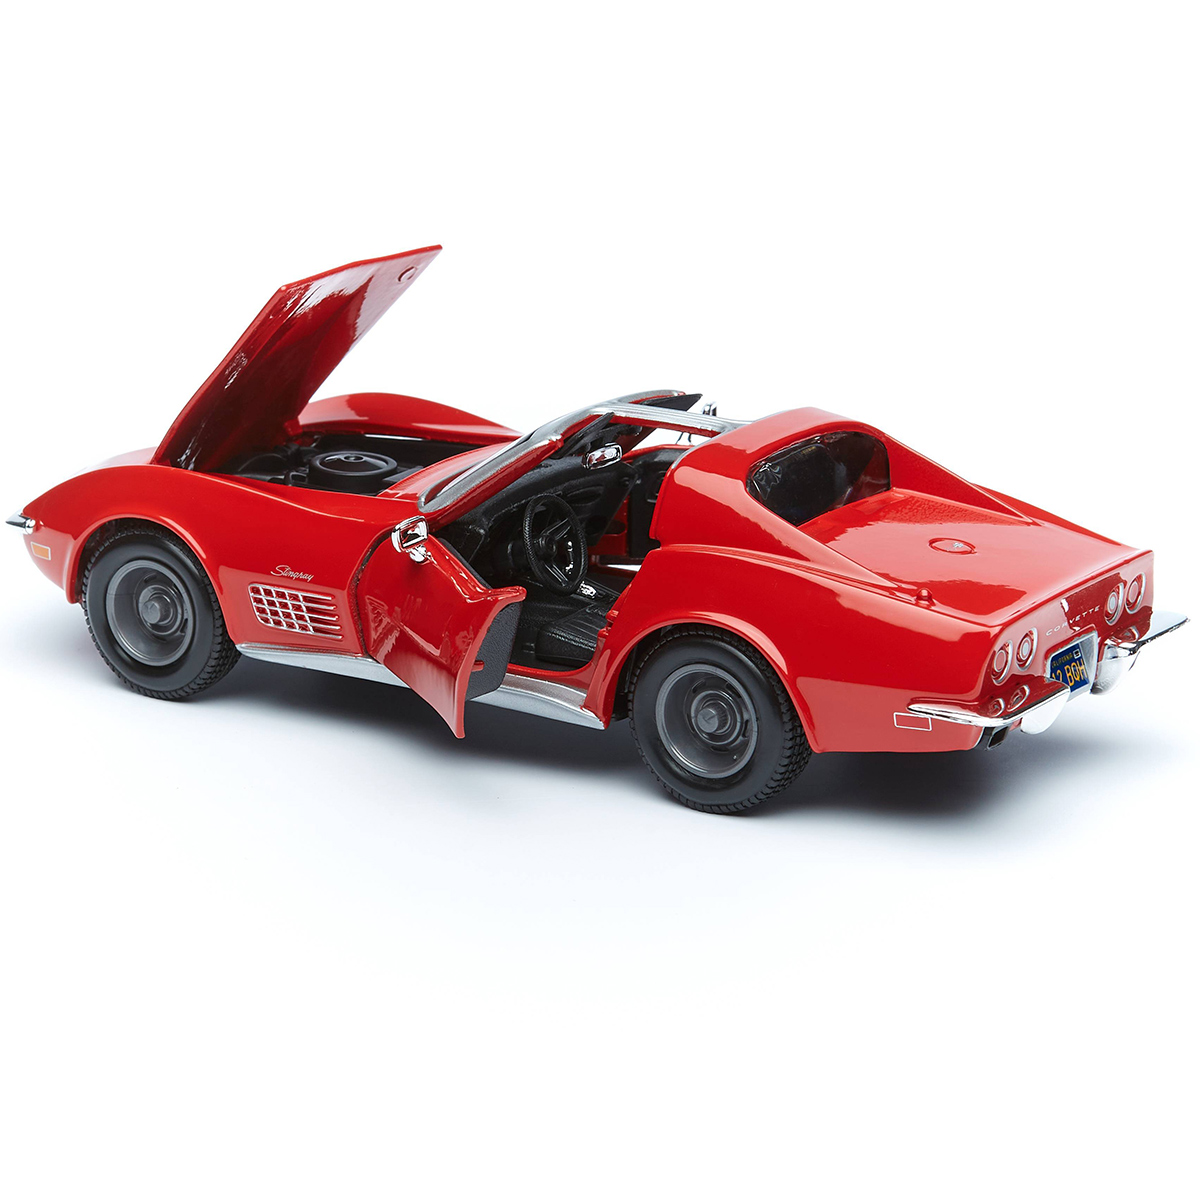 1970 Corvette - Maisto - Escala 1:24